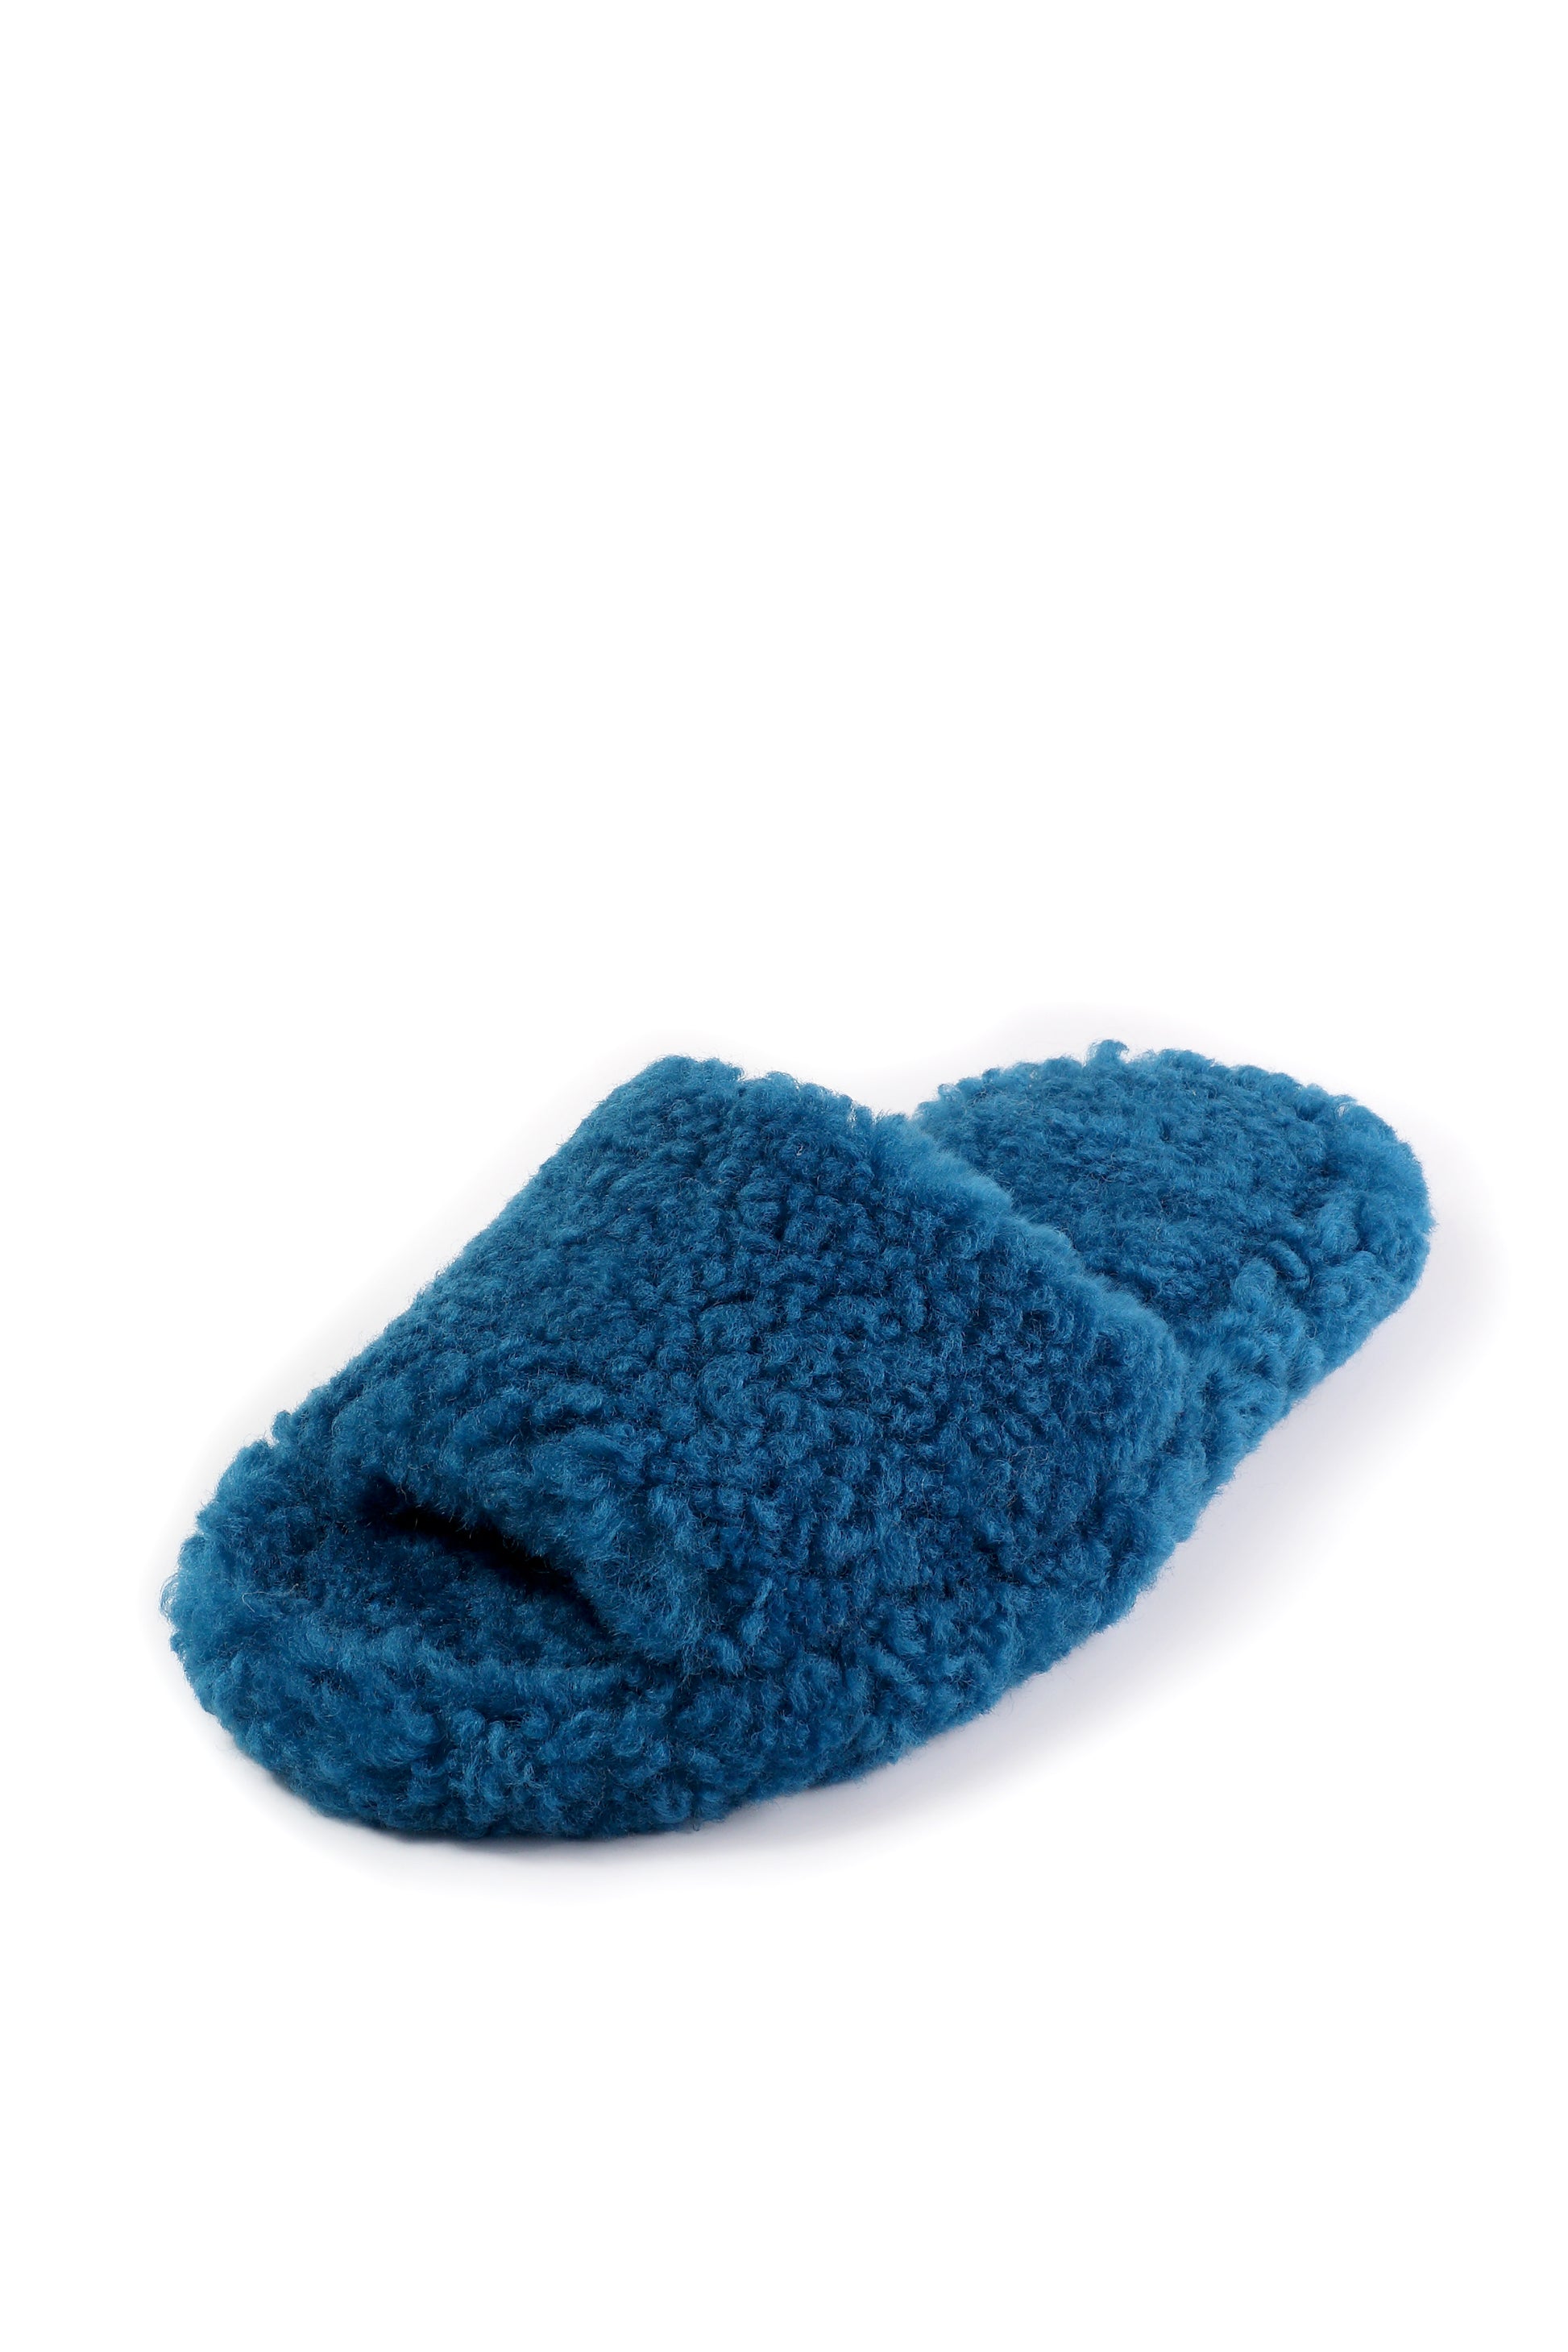 Open Toe Soft Blue Sheepskin Slippers with Blue Fur Lining